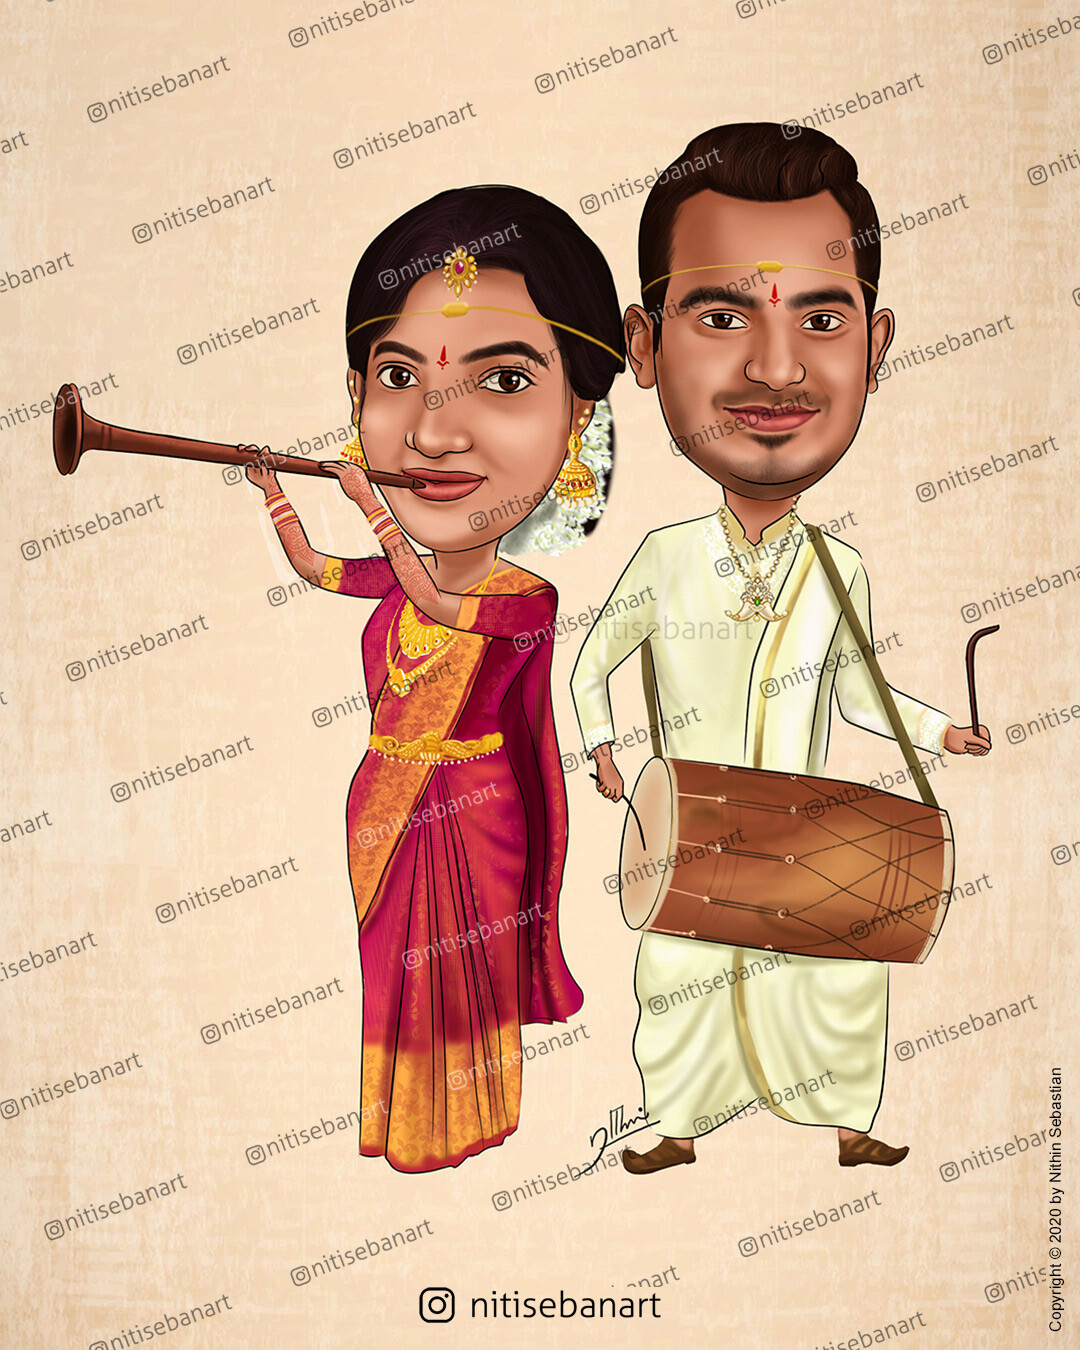 nithin sebastian - South indian wedding caricature